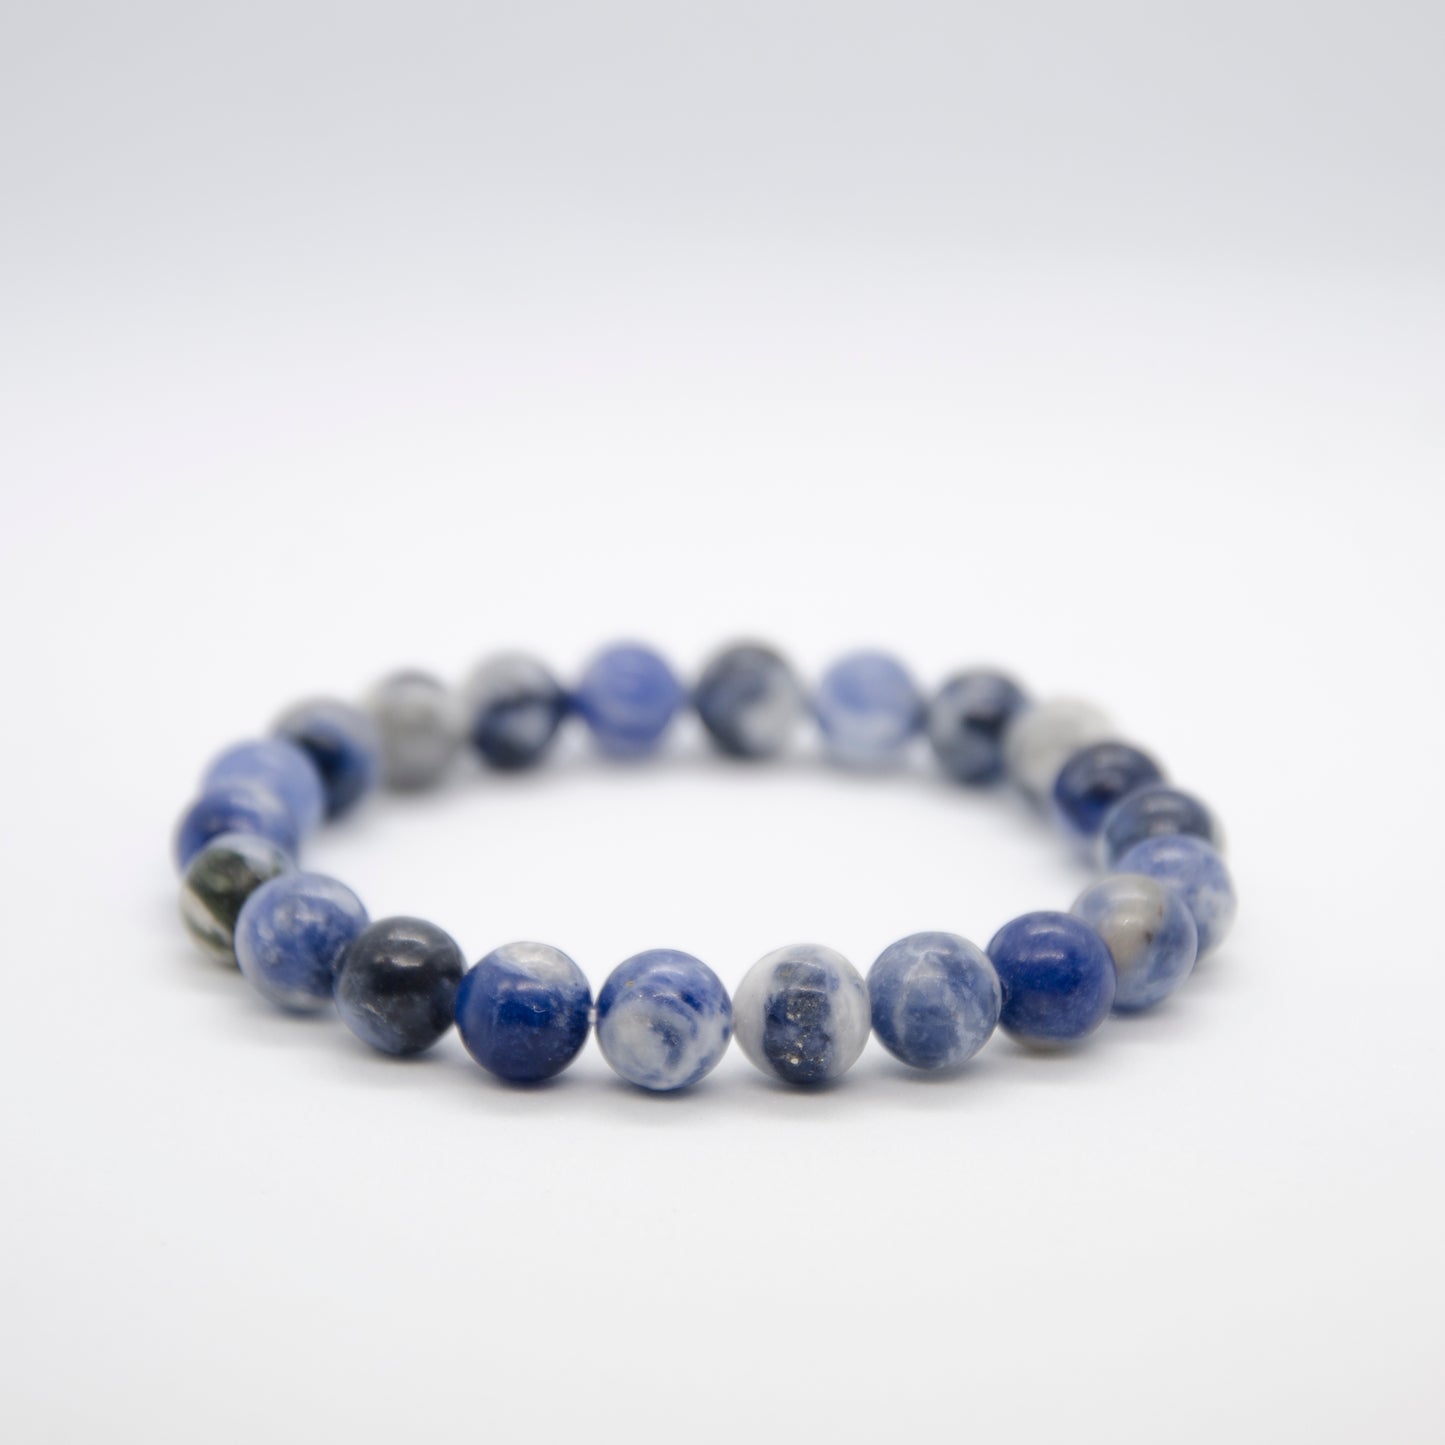 Blue Sodalite bracelet